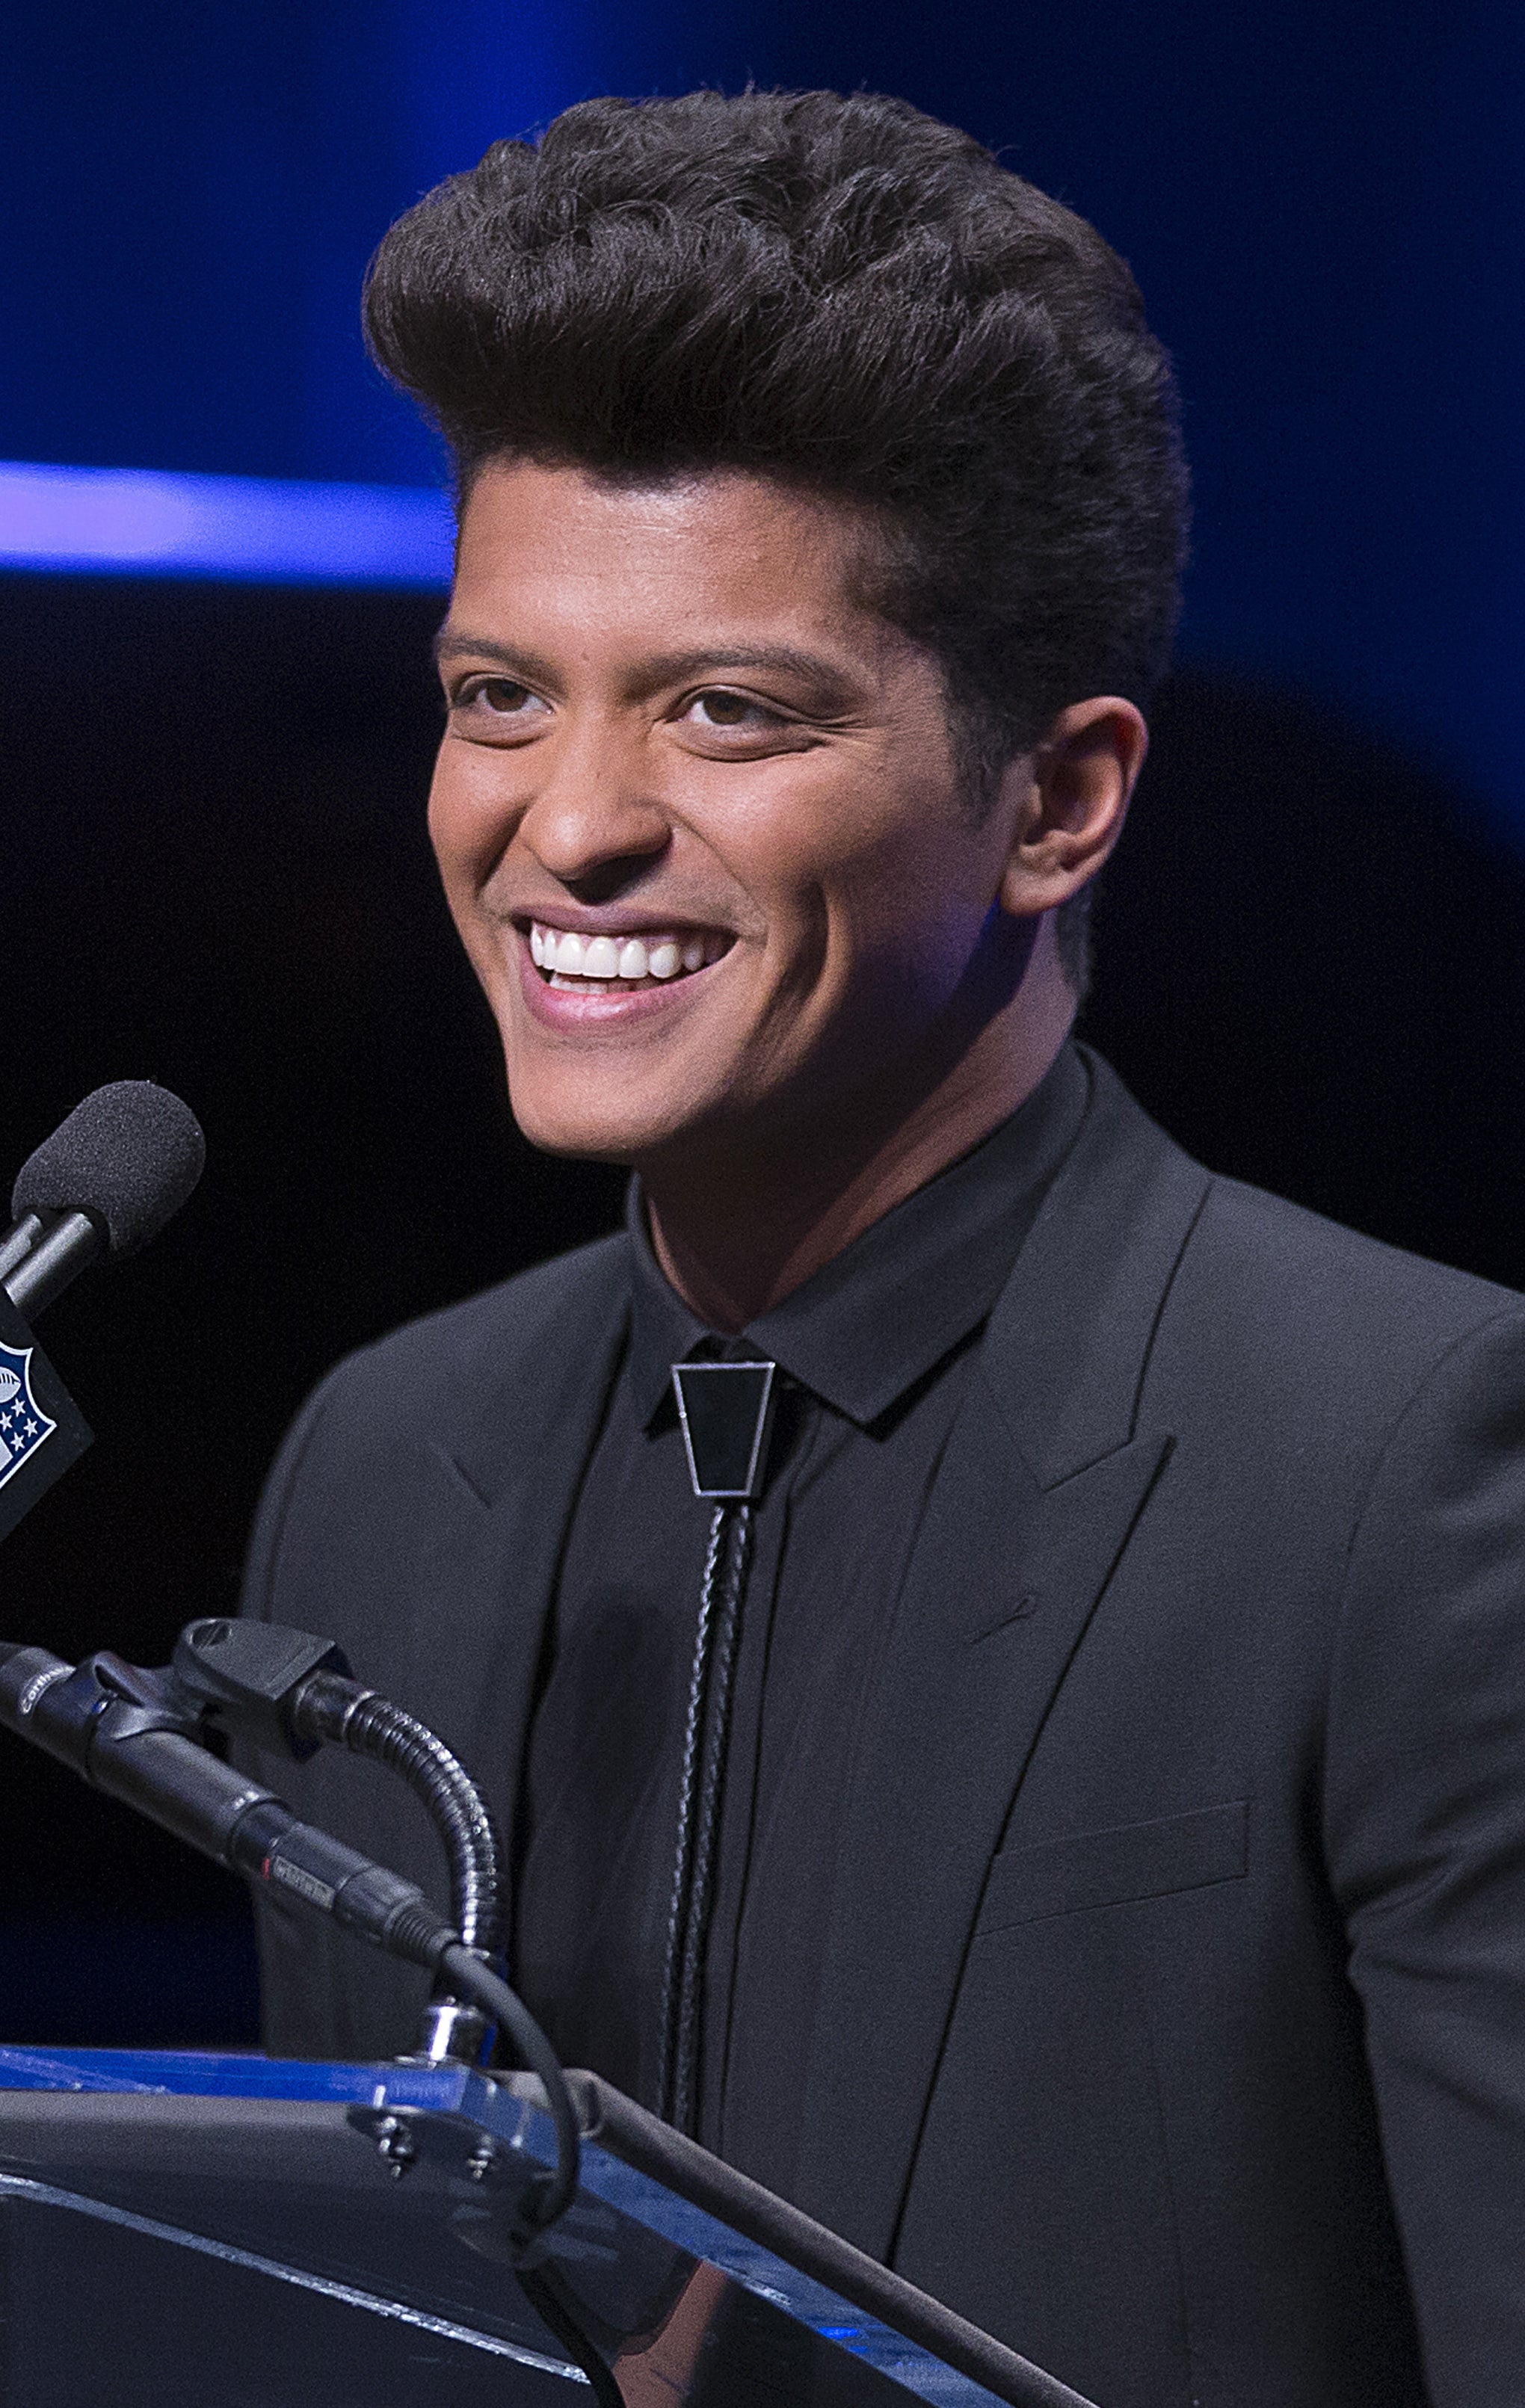 Bruno Mars giving a speech, wearing an all-black suit 